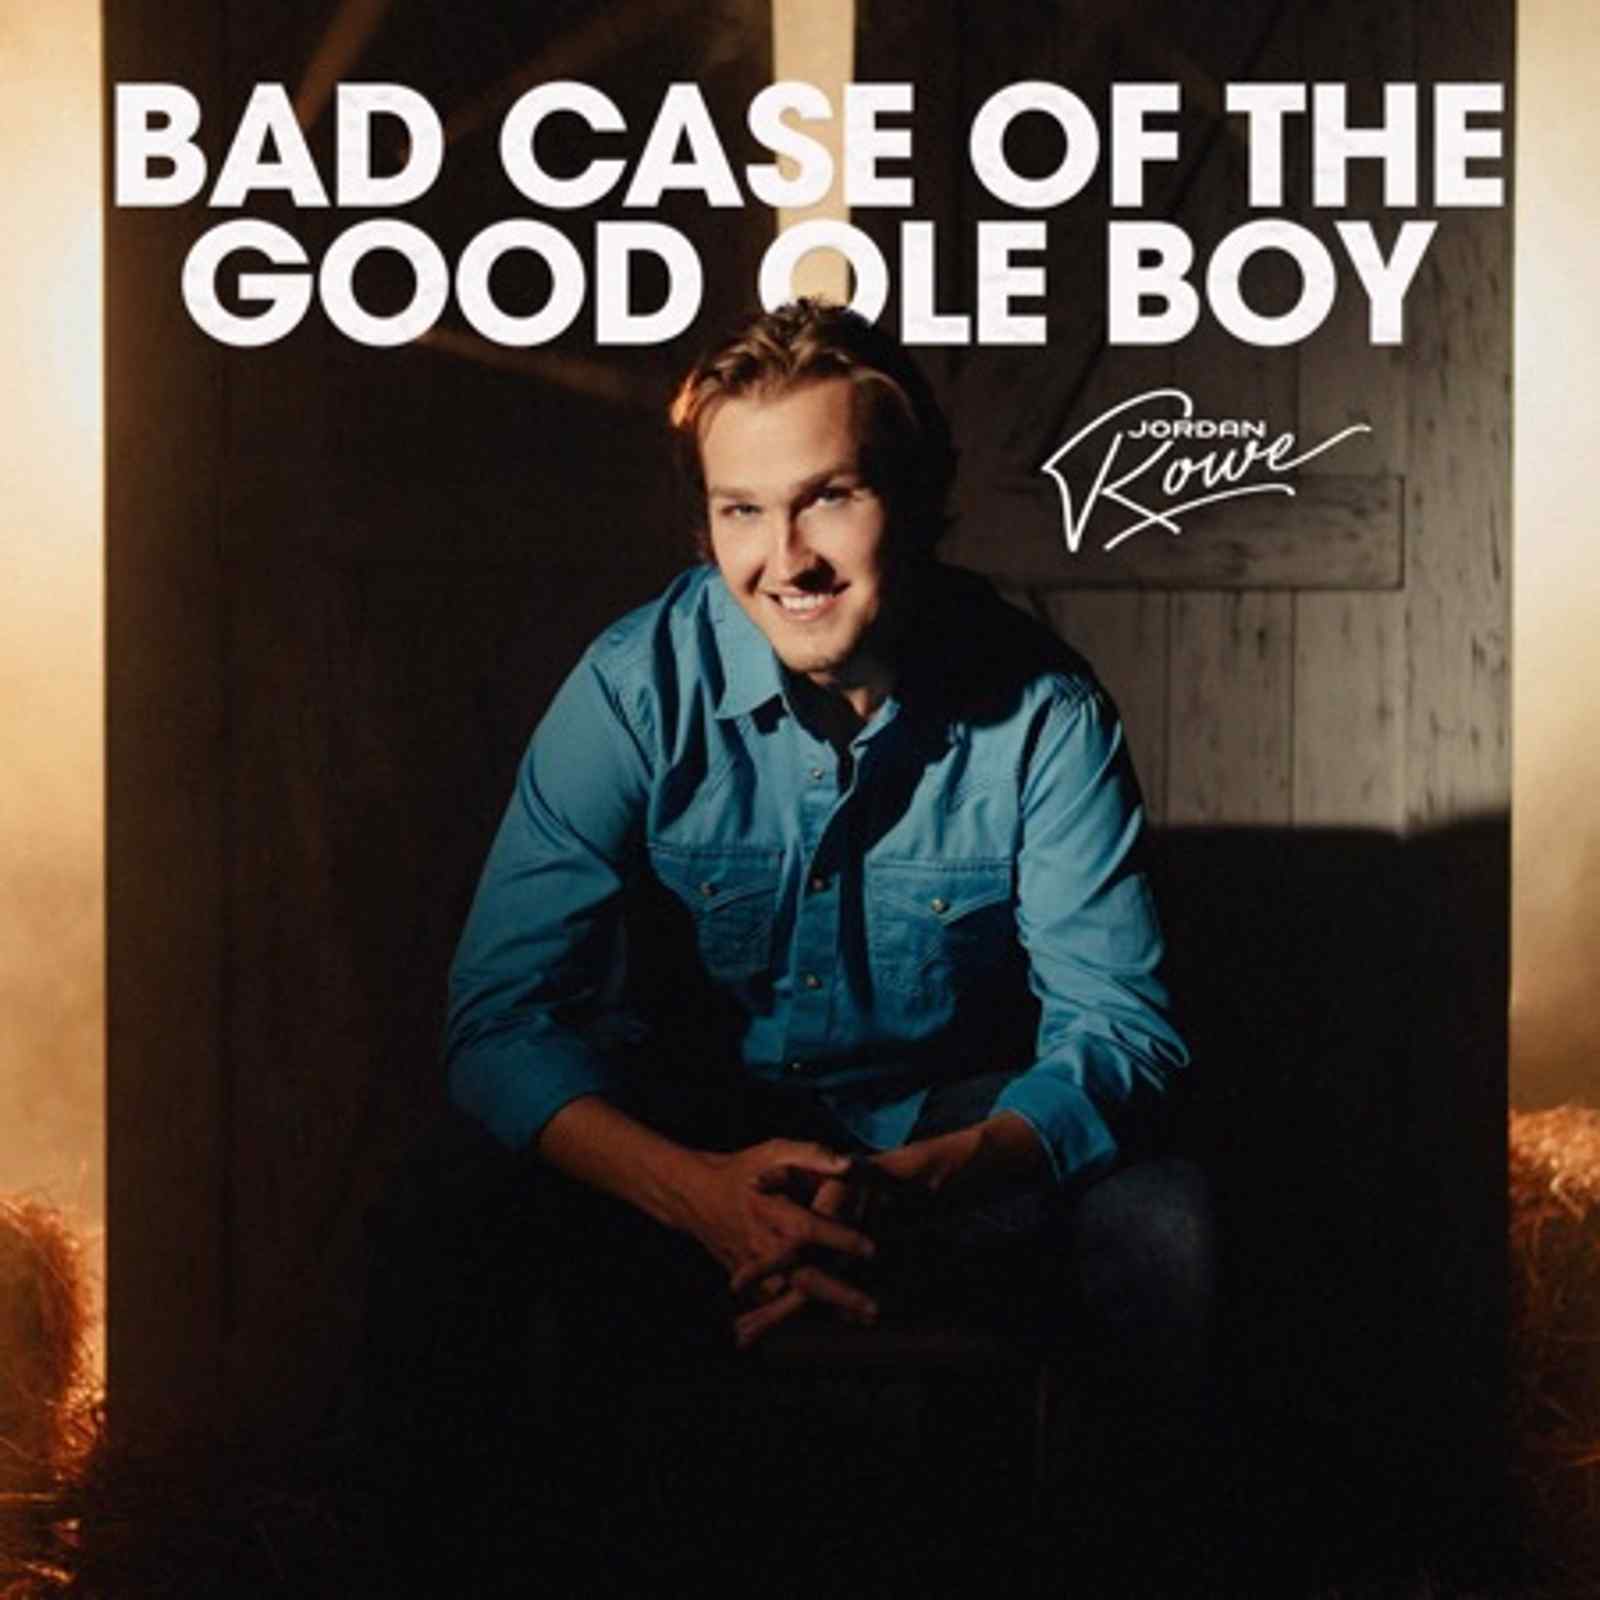 Bad Case of the Good Ole Boy by Jordan Rowe